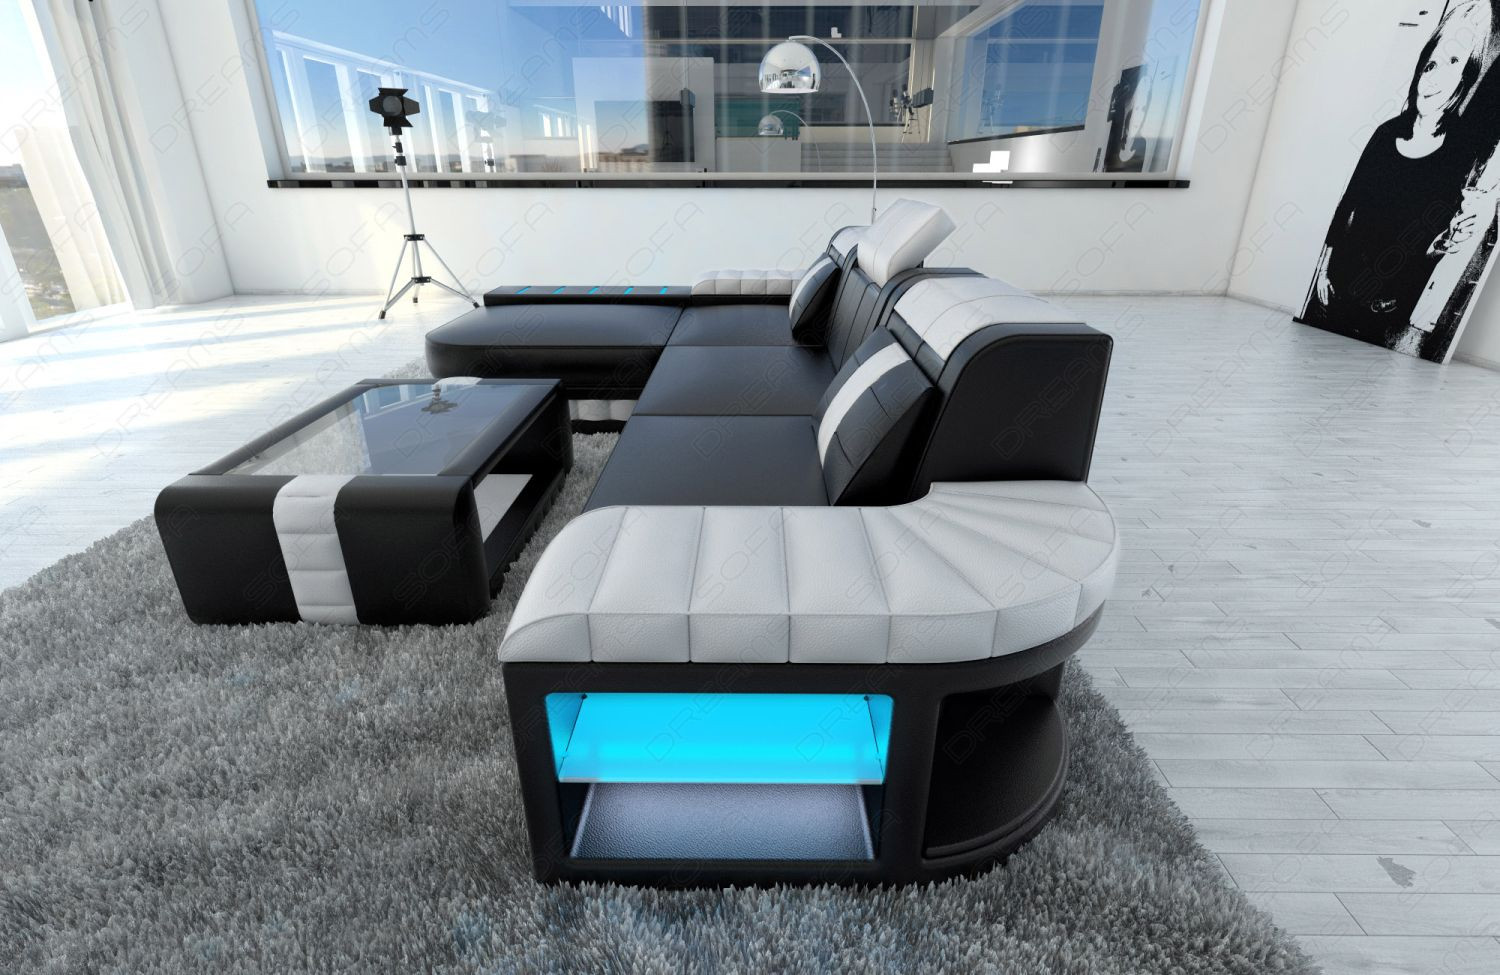 Sofa Mit Led
 Modern Sofa BELLAGIO LED L Shaped black white